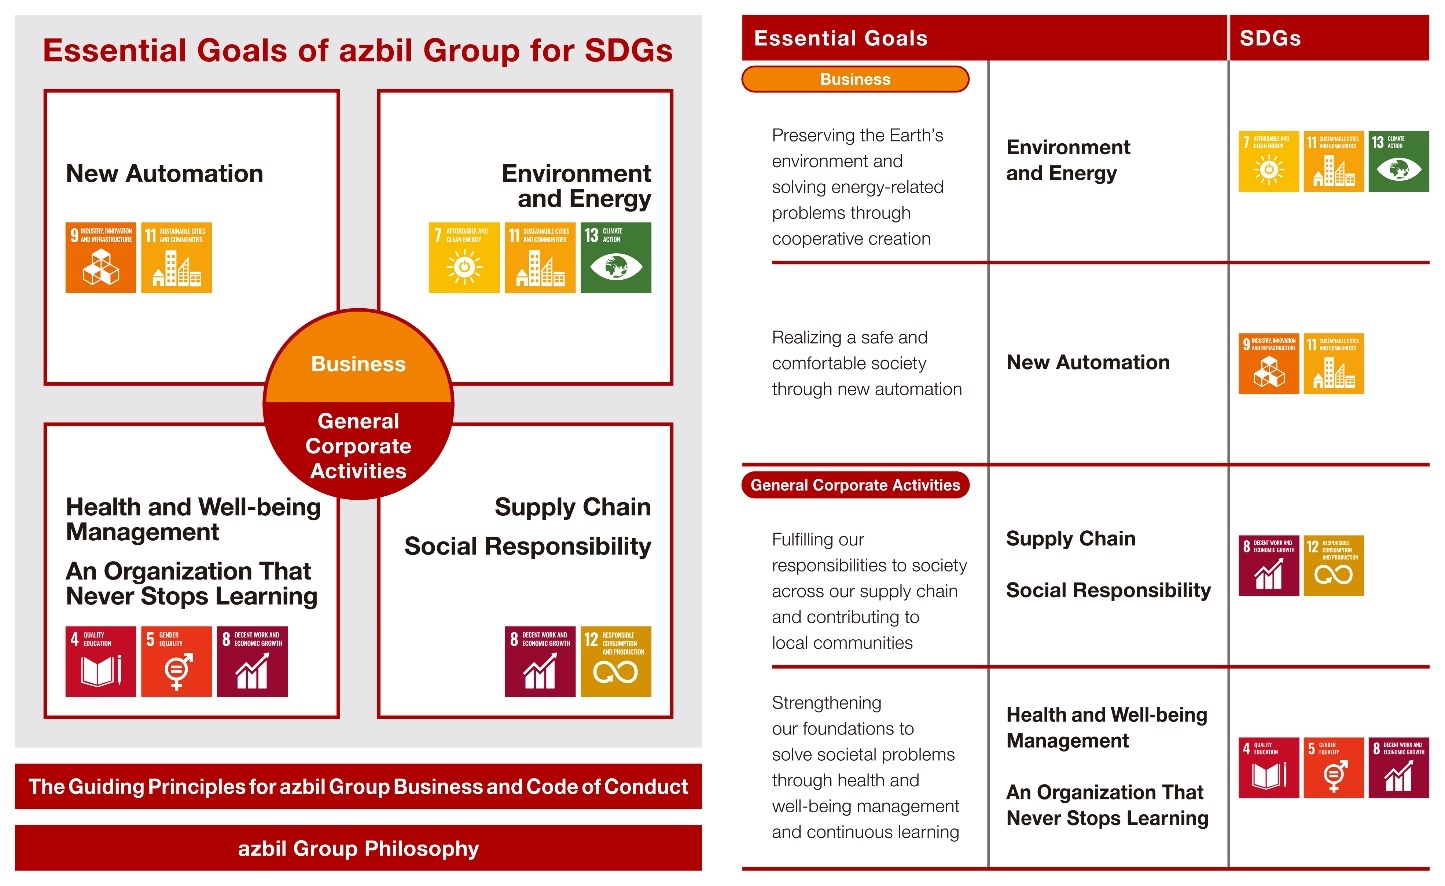 Essential goals of azbil Group for SDGs